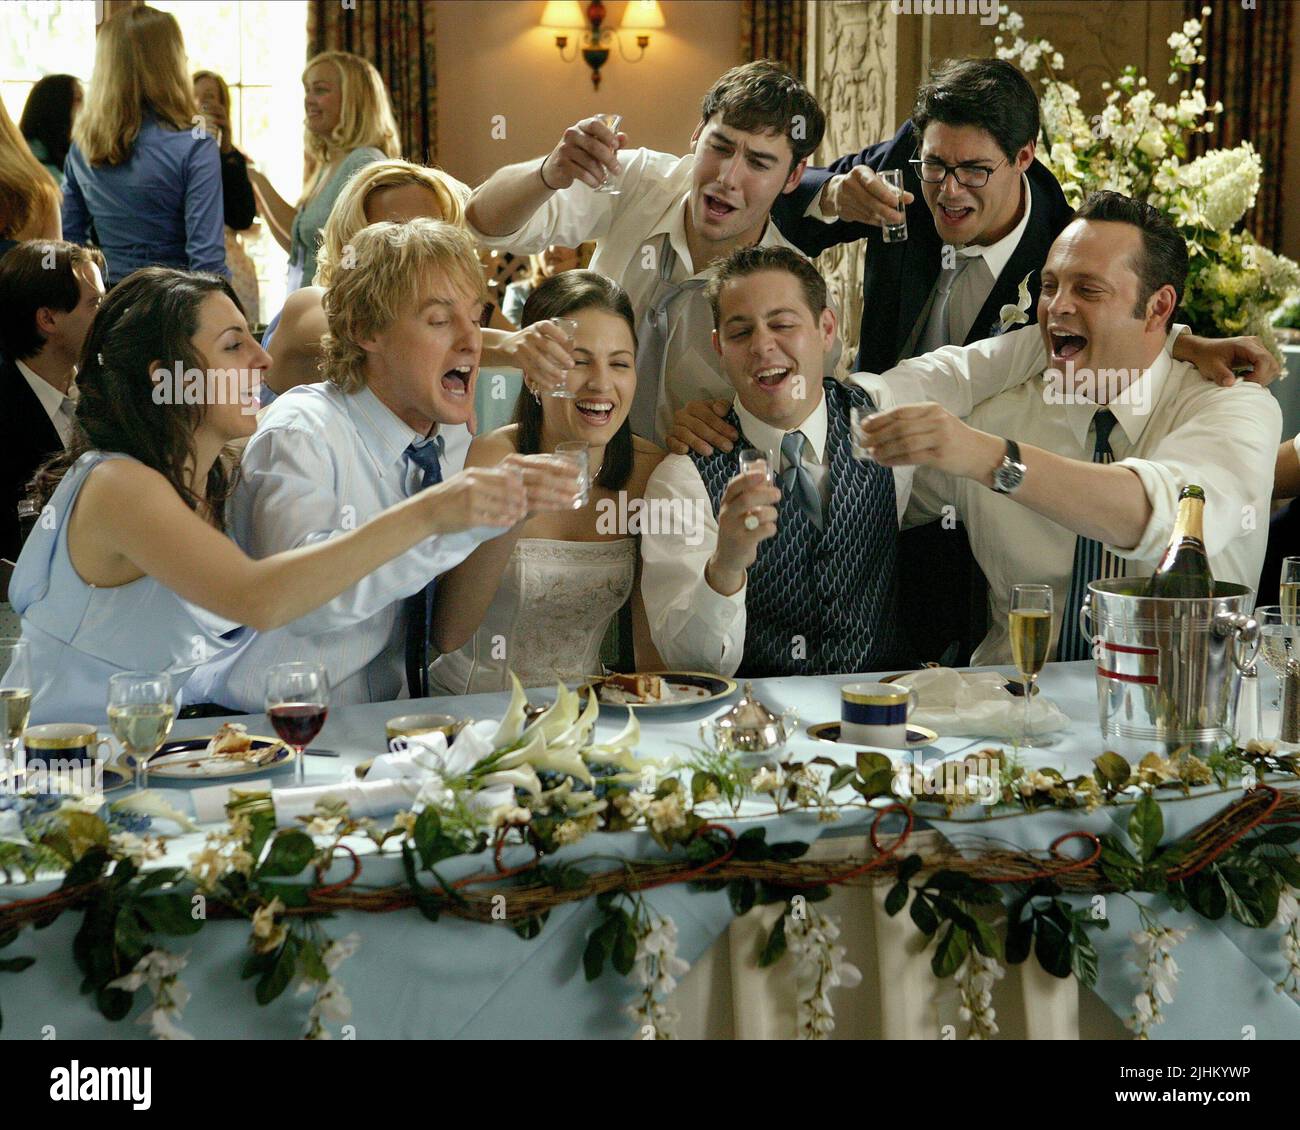 OWEN WILSON, VINCE VAUGHN, THE WEDDING CRASHERS, 2005 Stock Photo